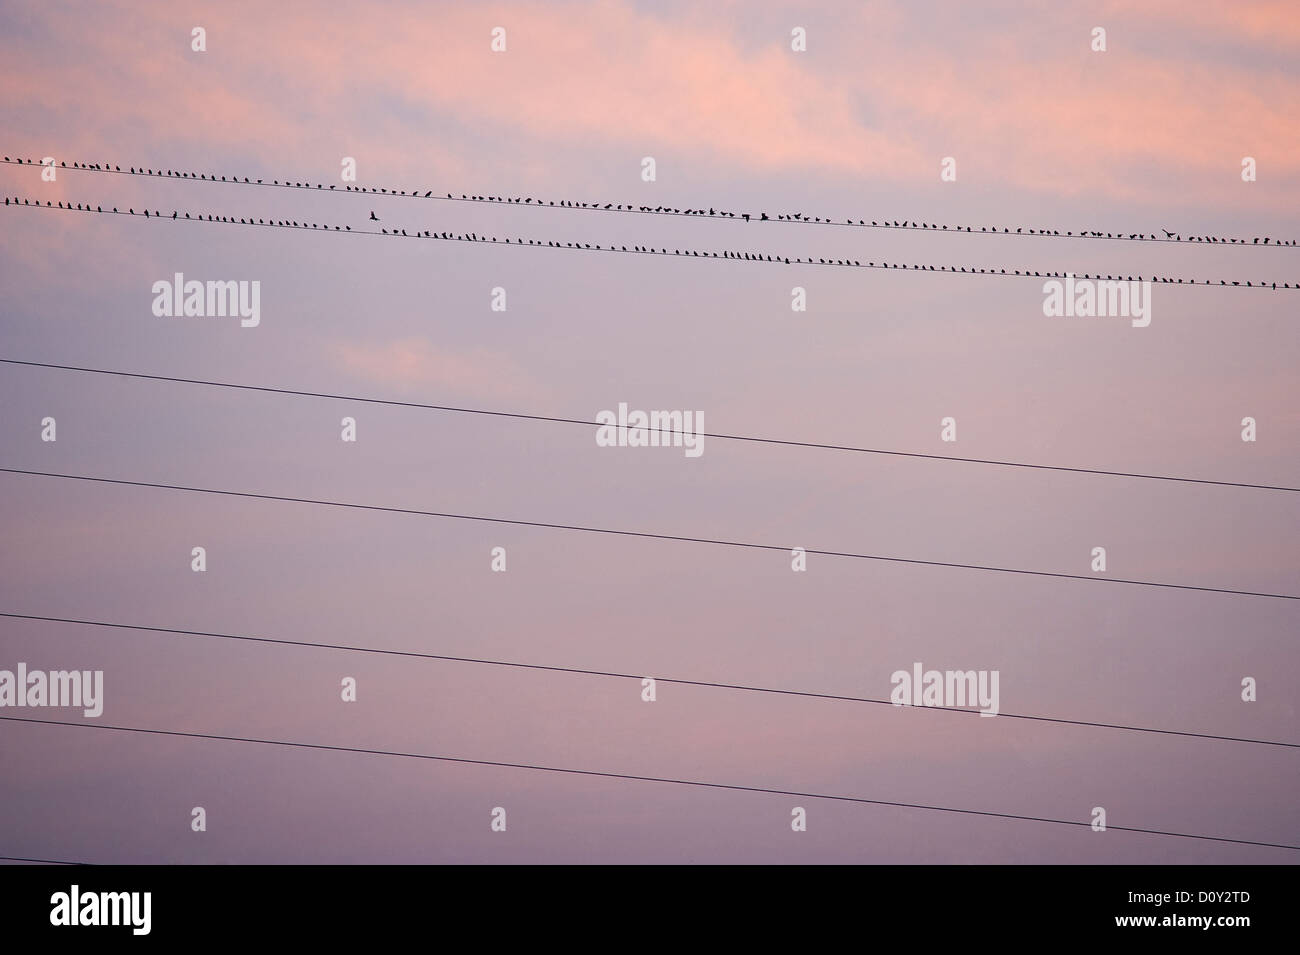 Viele Vögel auf Drähte bei Sonnenuntergang Stockfoto